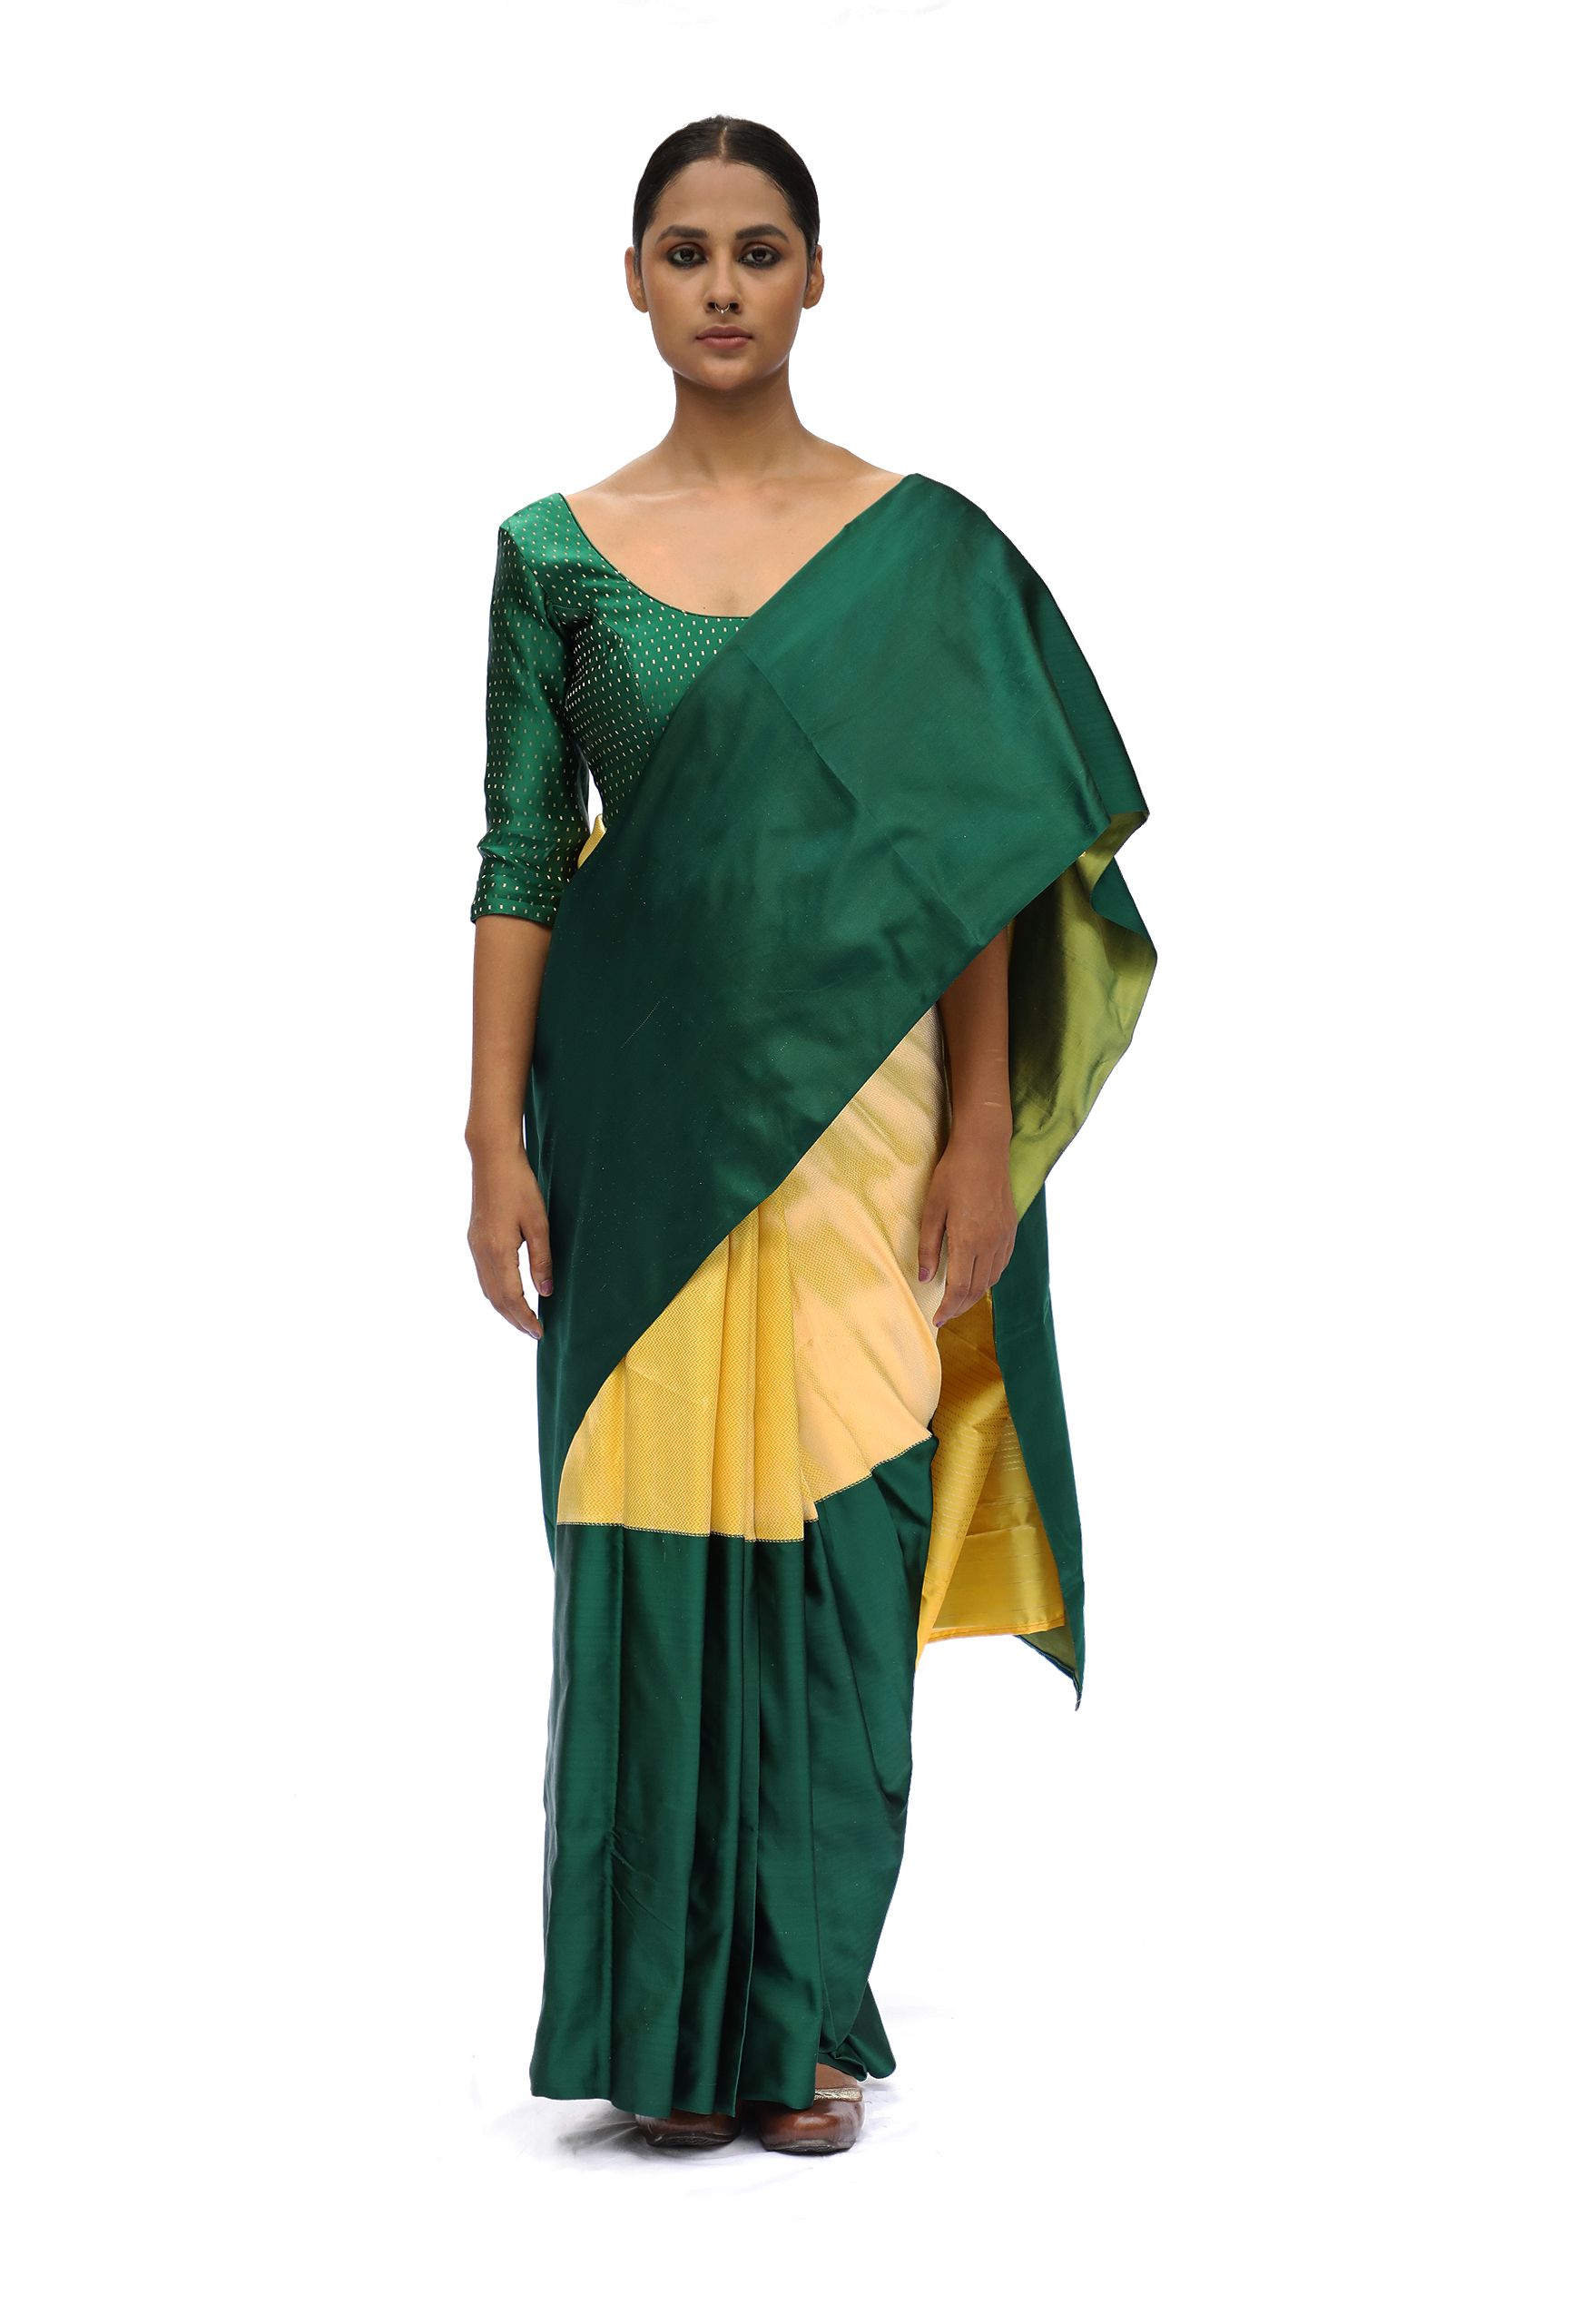 Green and yellow contemporary saree